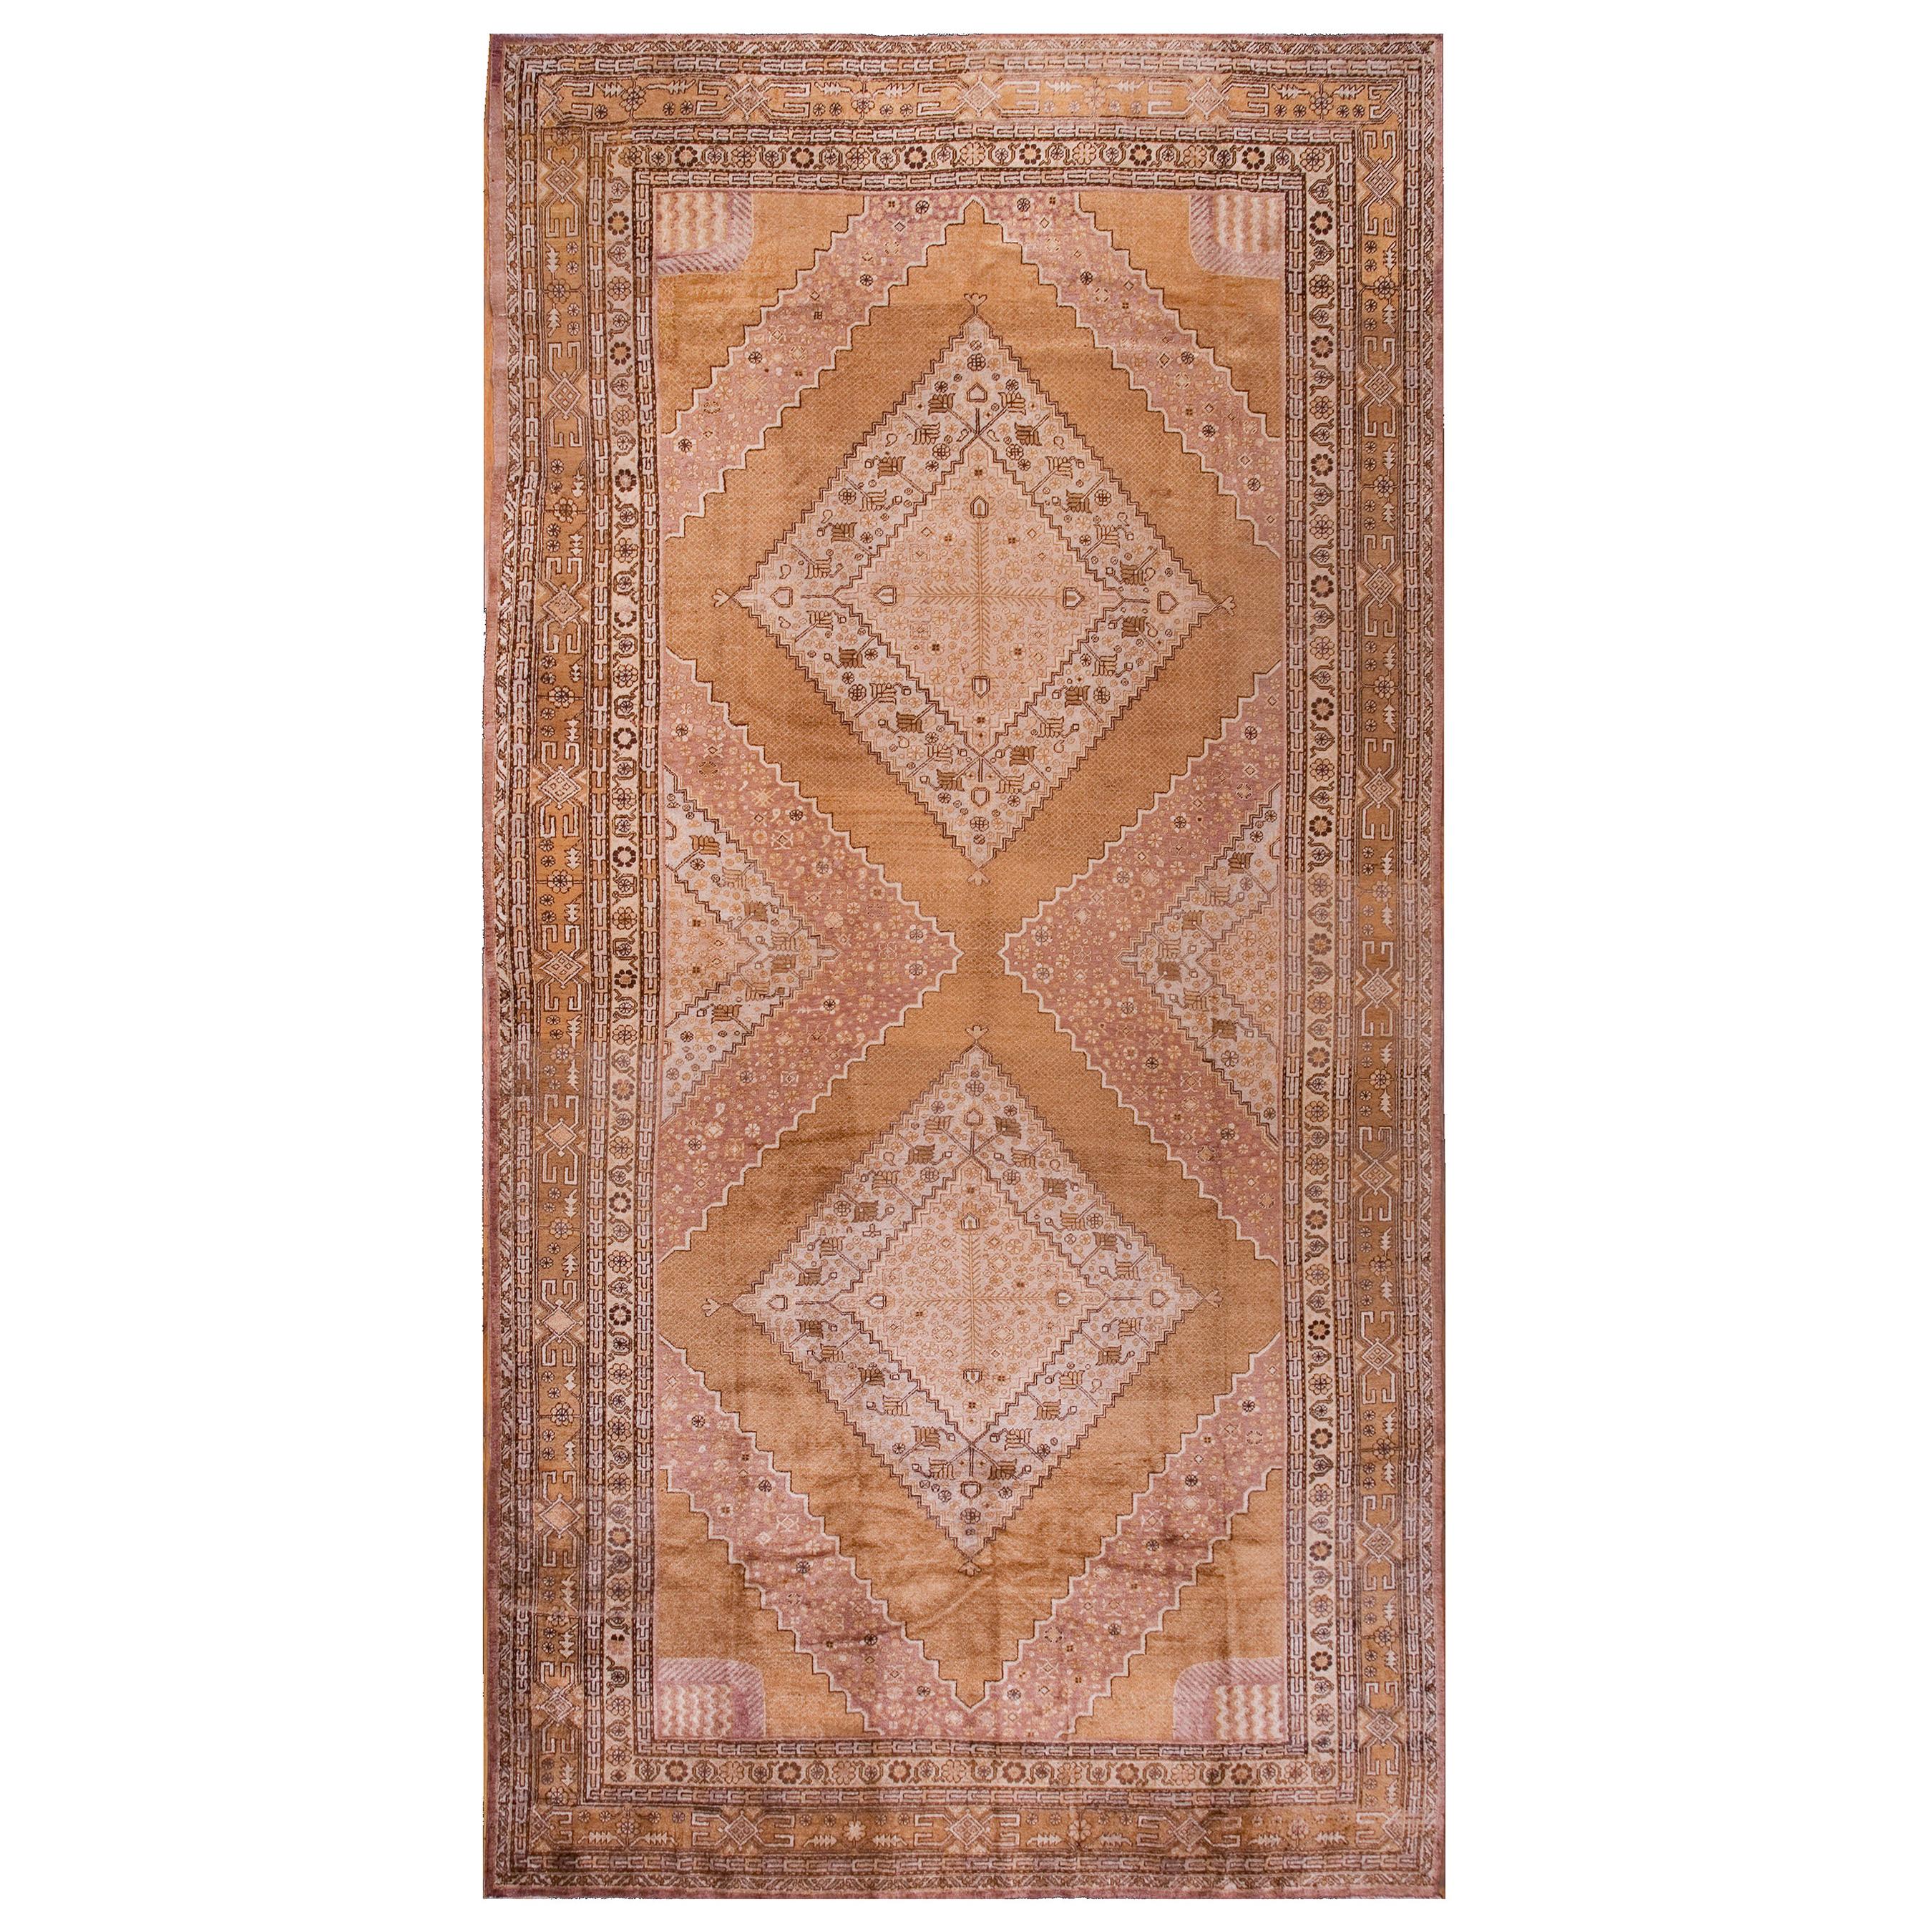 1930's Central Asian Khotan Carpet ( 9'2" x 18'2" - 279 x 553 )